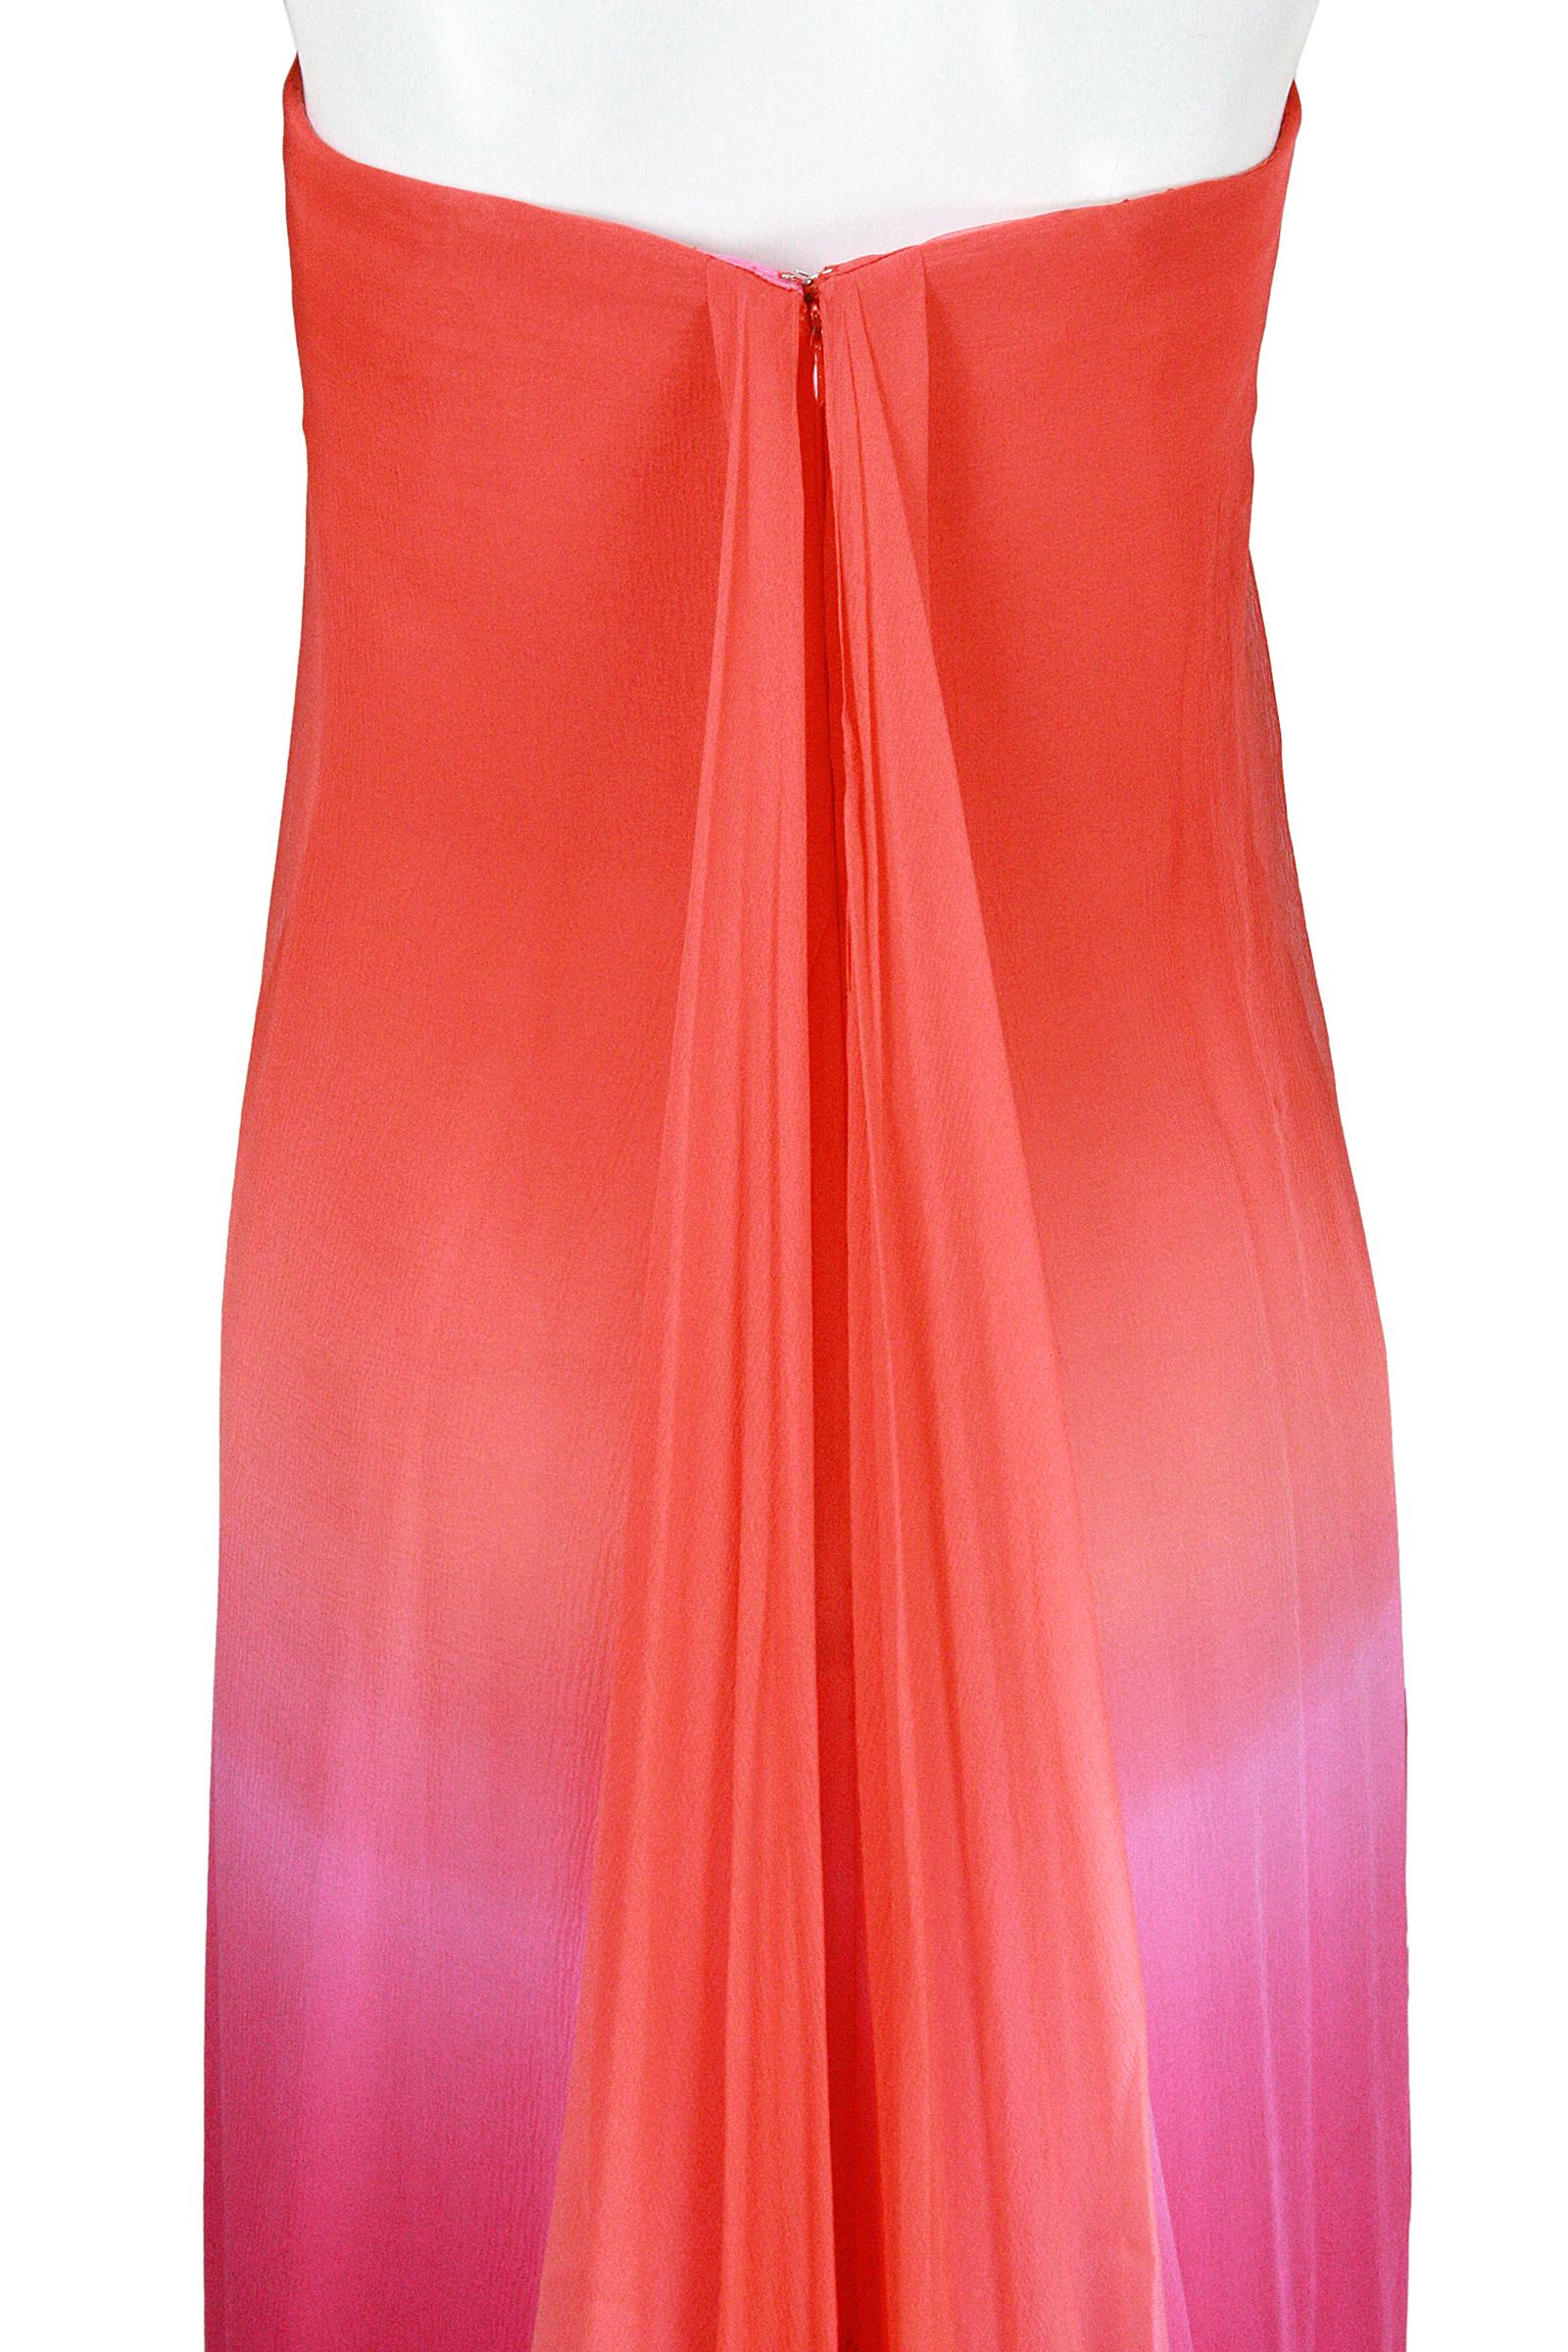 Oscar De La Renta Orange and Pink Ombre Chiffon Gown with Wrap